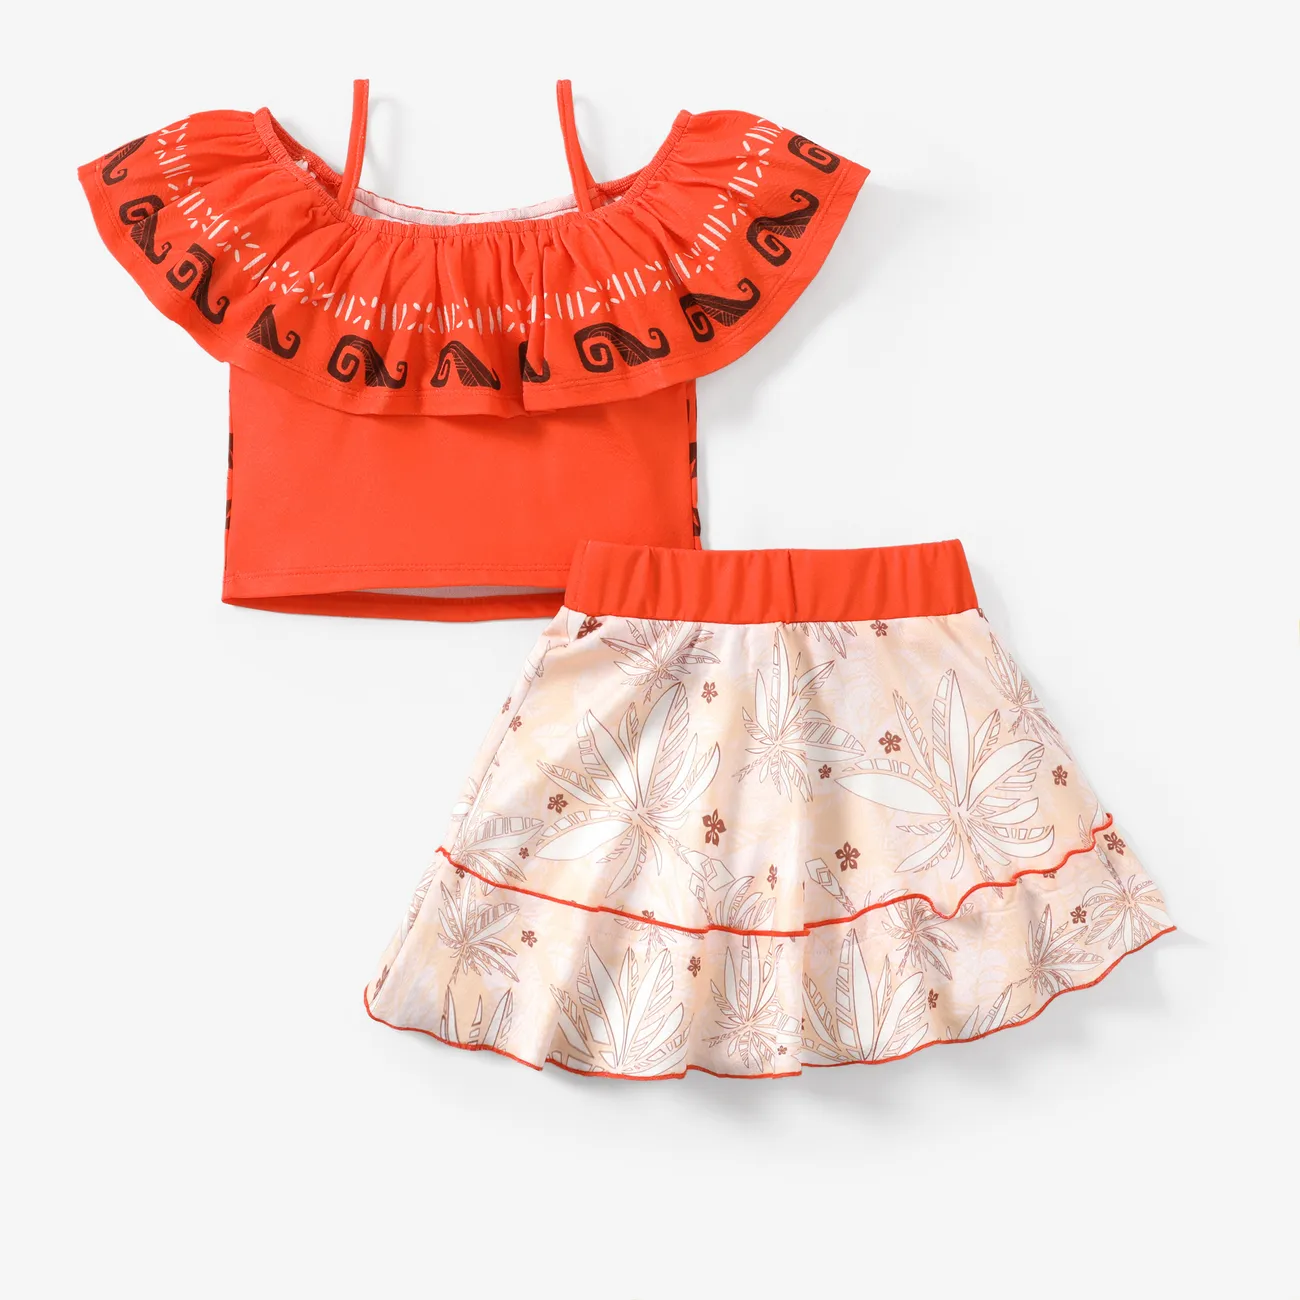 Disney Princess Moana 2pcs Toddler/Kid Girls Palm Leaves Ruffled Bowknot Dress Set orangered big image 1